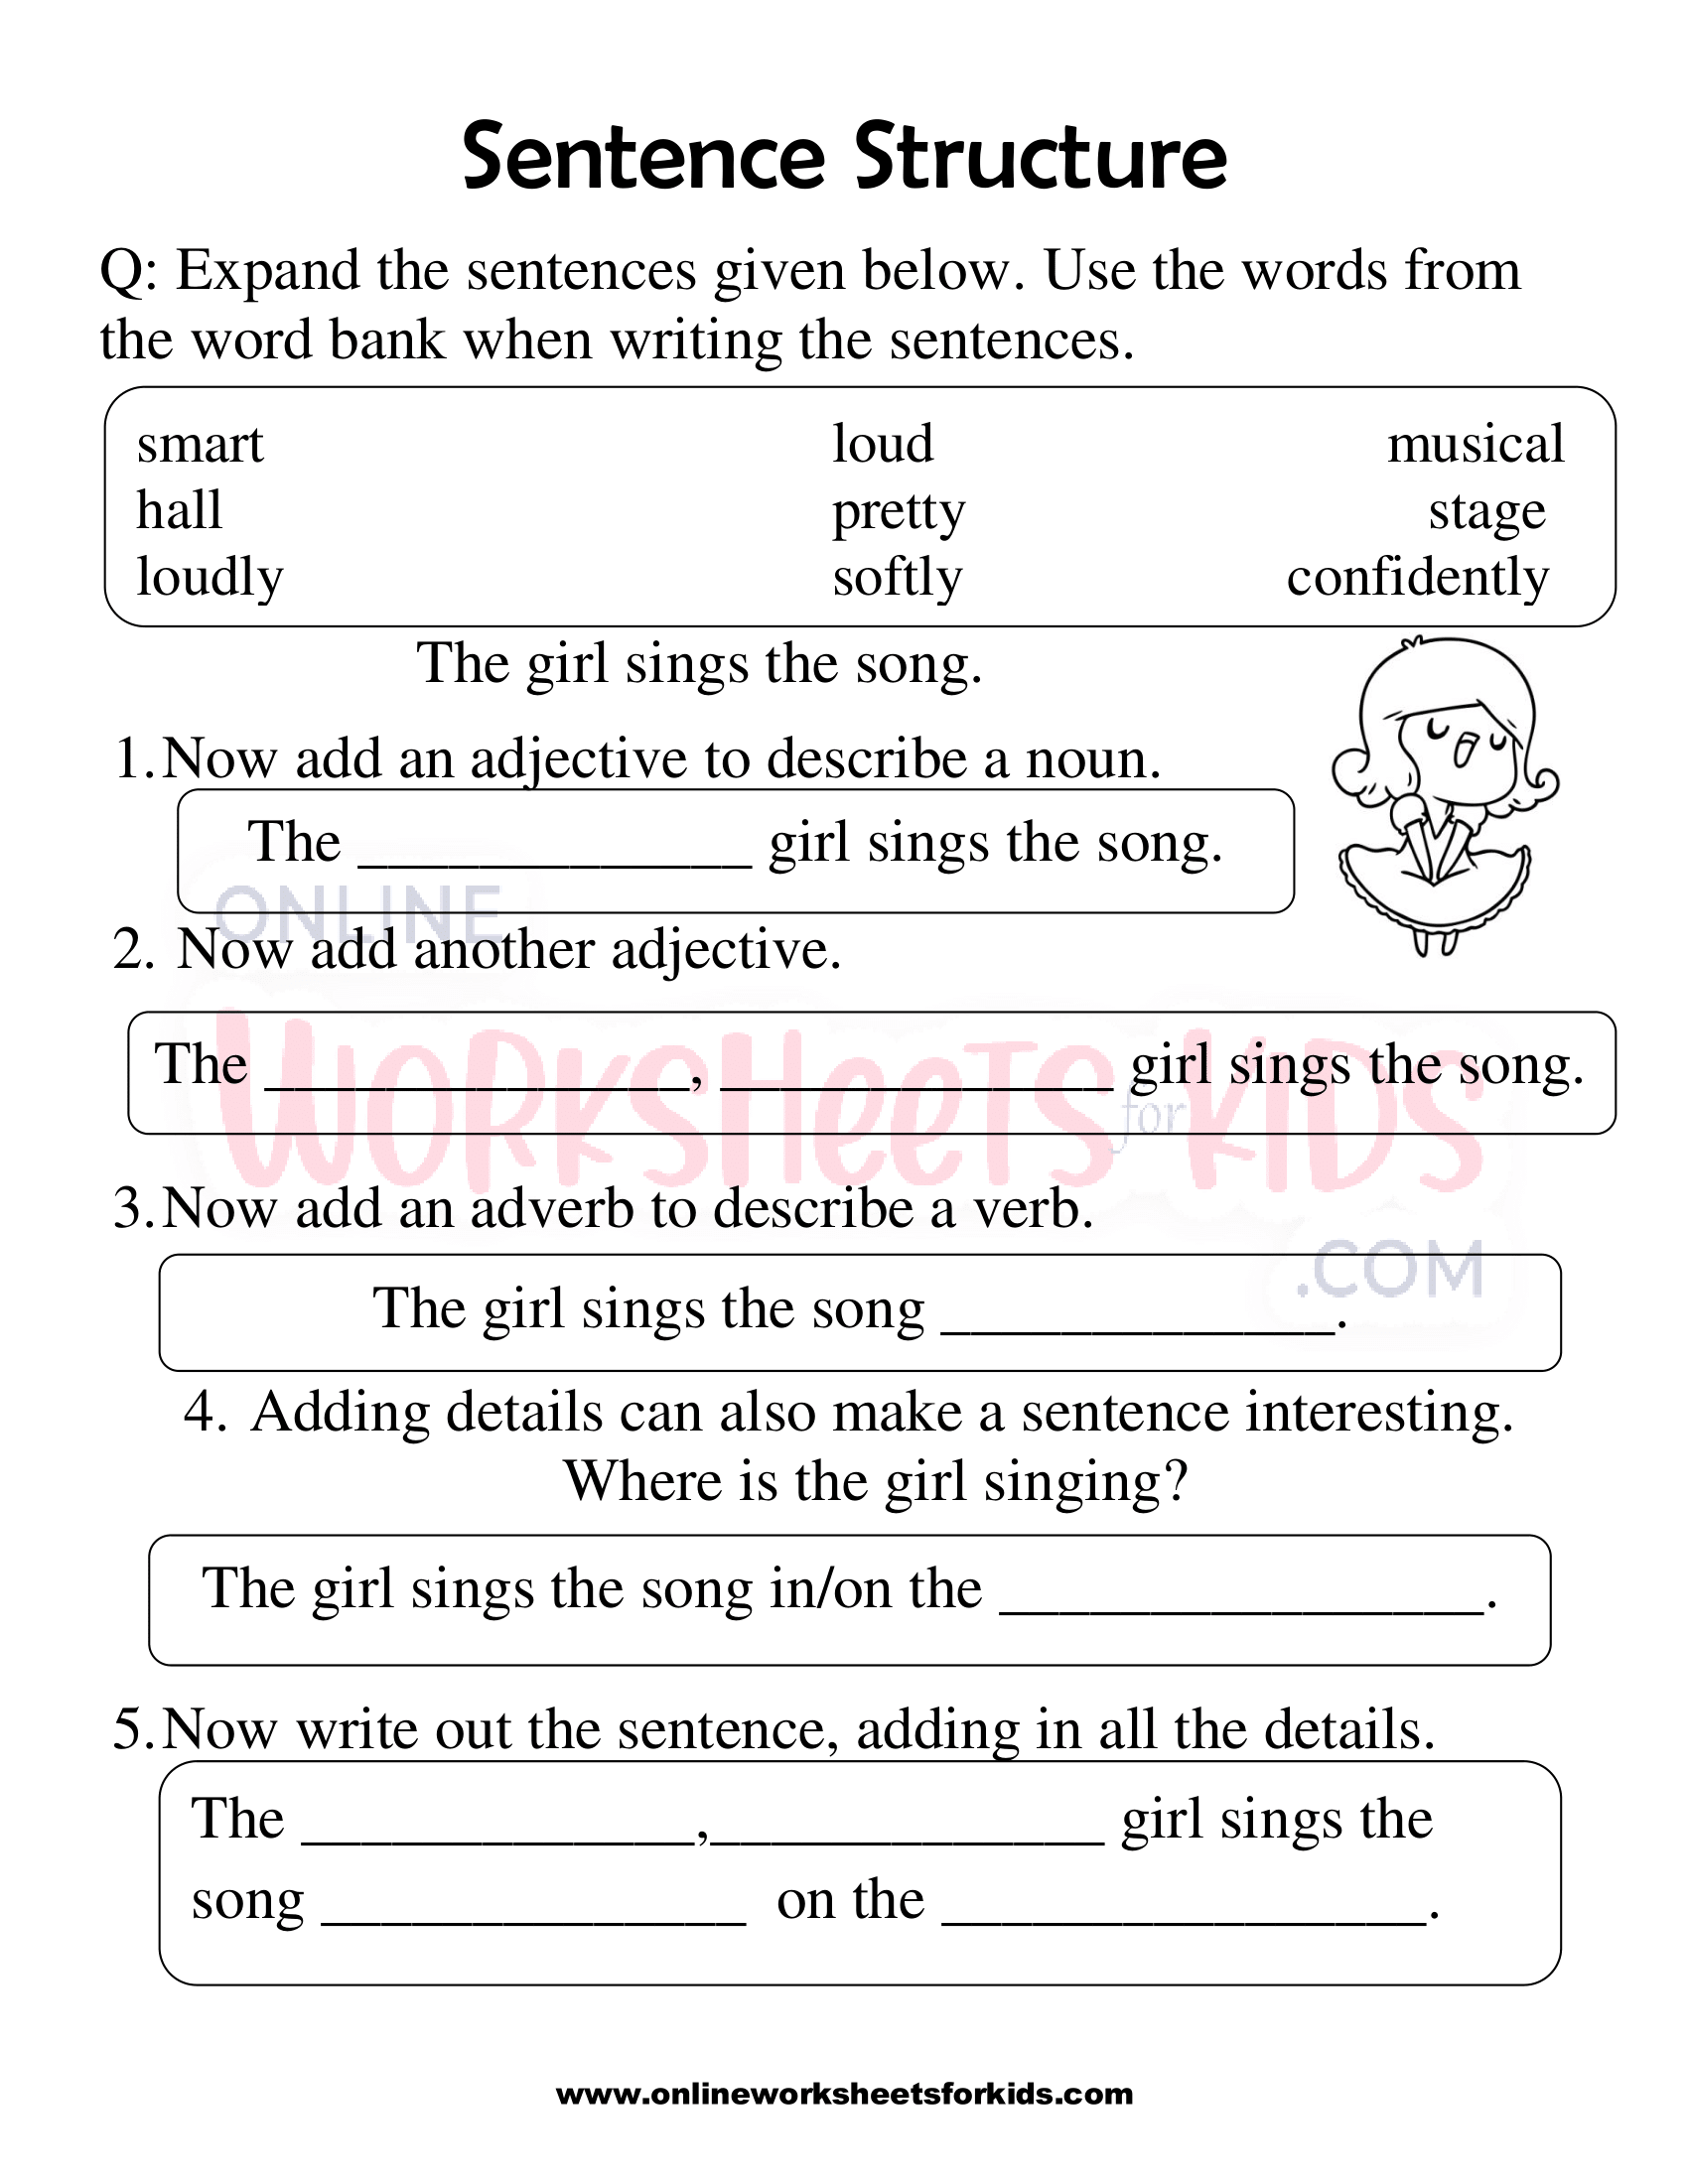 Sentence Structure Worksheets For Grade 6